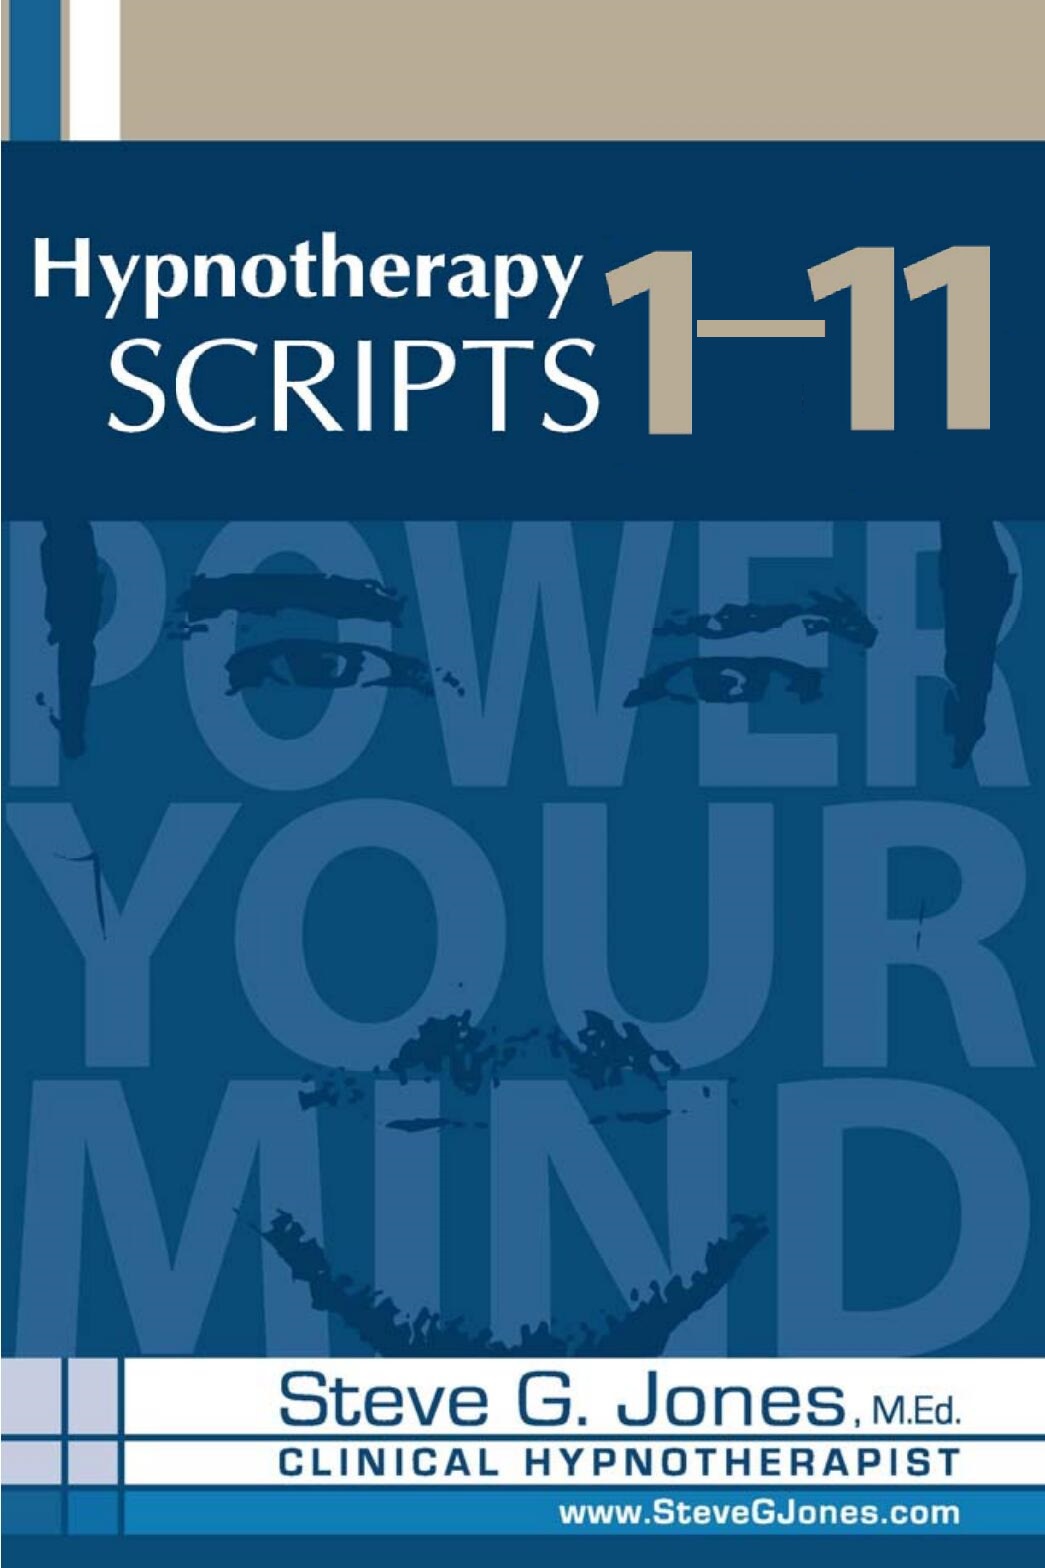 Dr. Steve G. Jones - Hypnotherapy Scripts Volume (1-11)